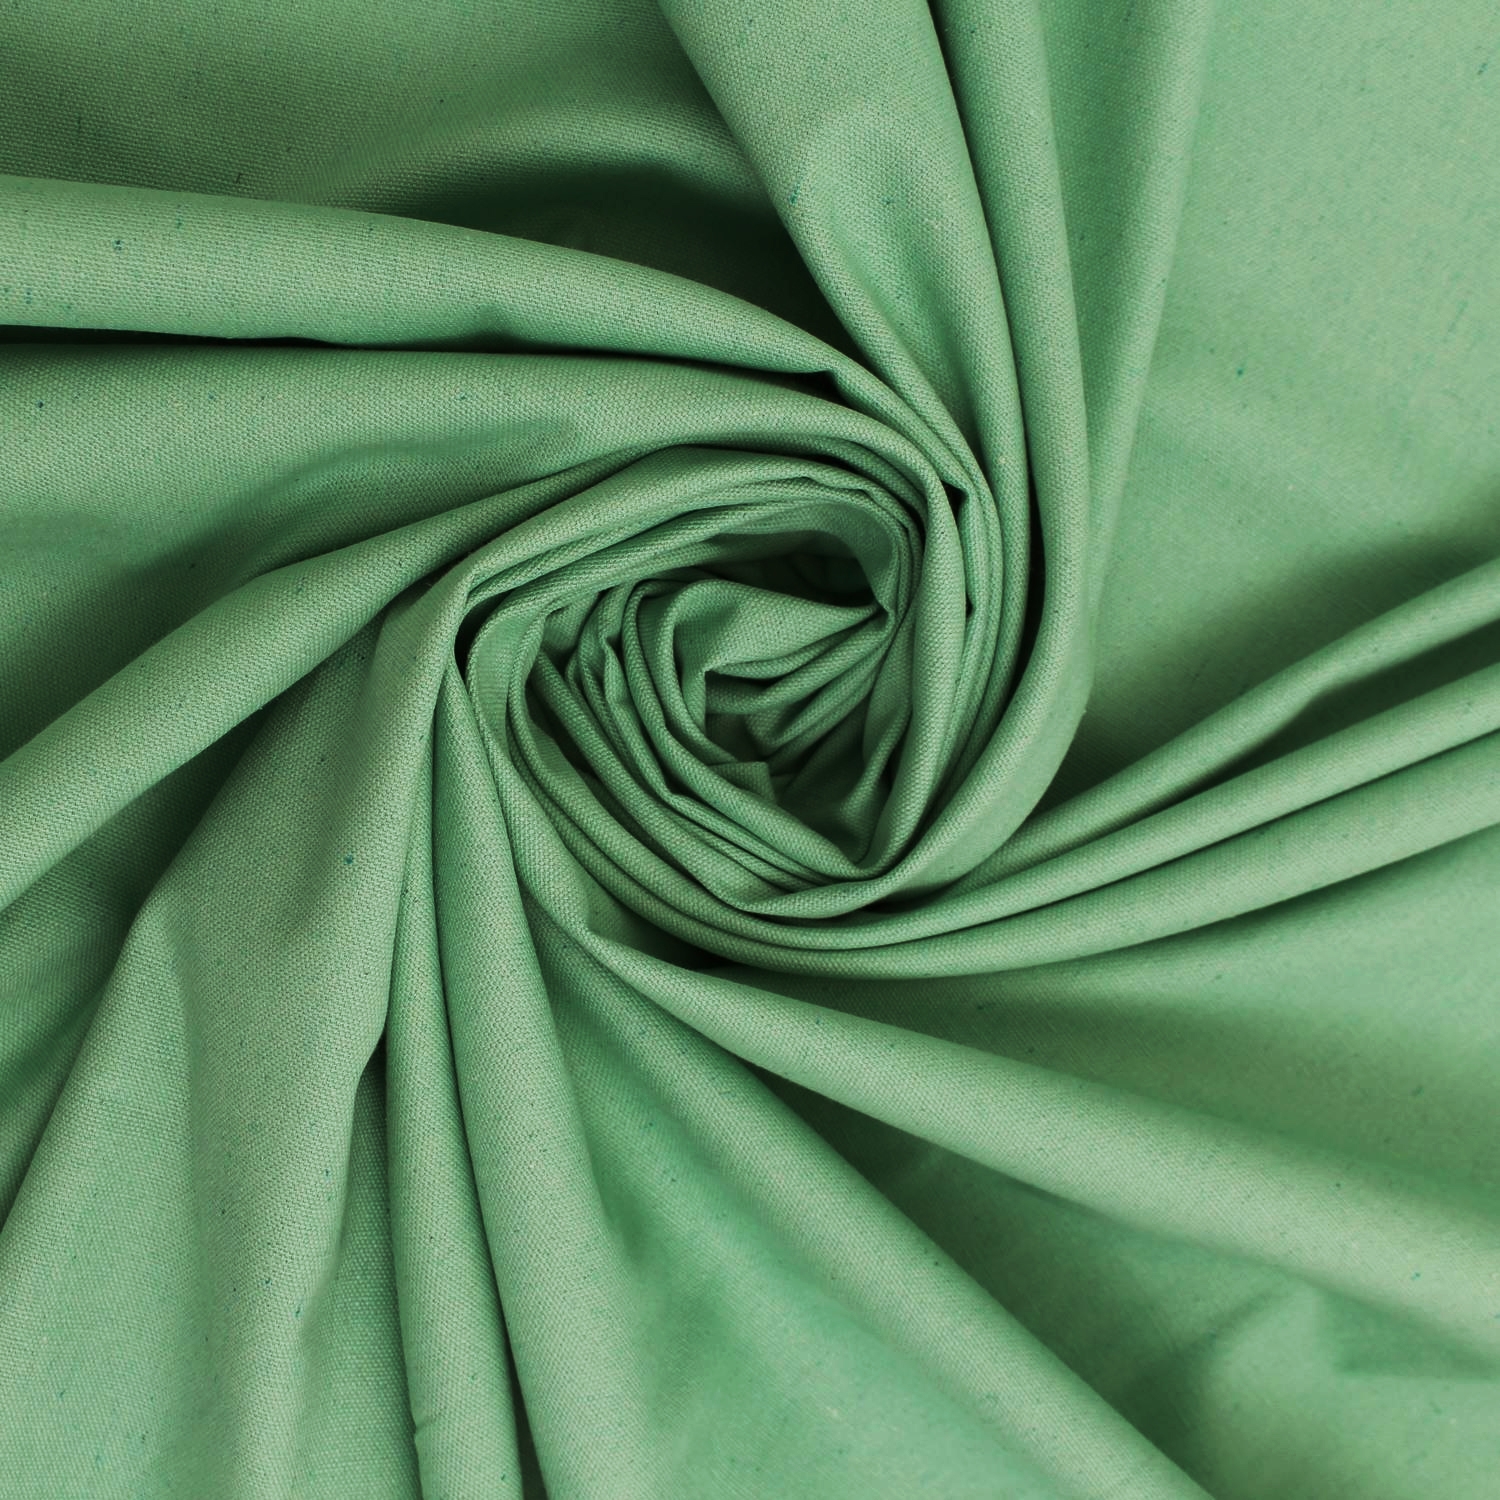 Caribbean Plain Cotton Canvas Sea Green Upholstery Fabric